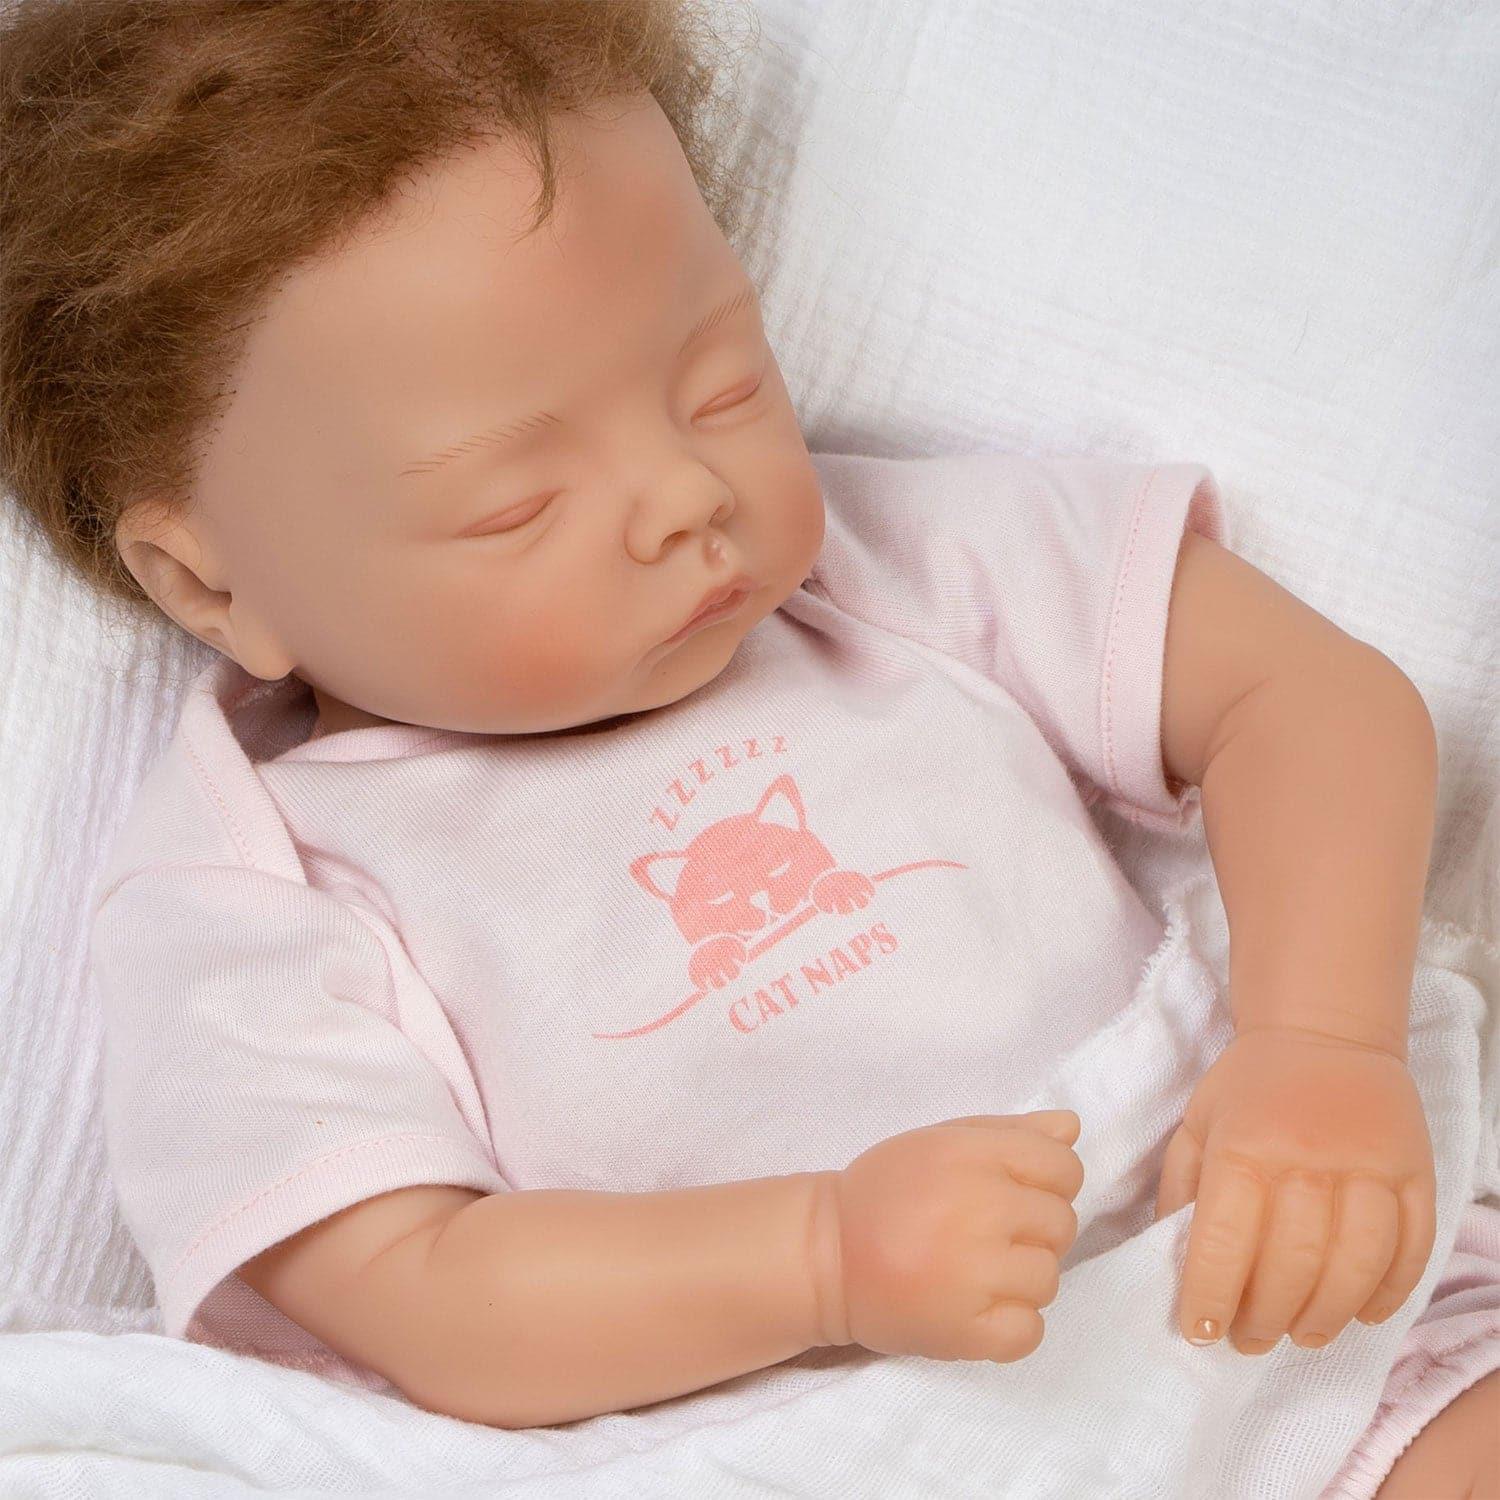 Paradise Galleries Reborn Baby Doll Girl - 18 inch Sleeping Kitten